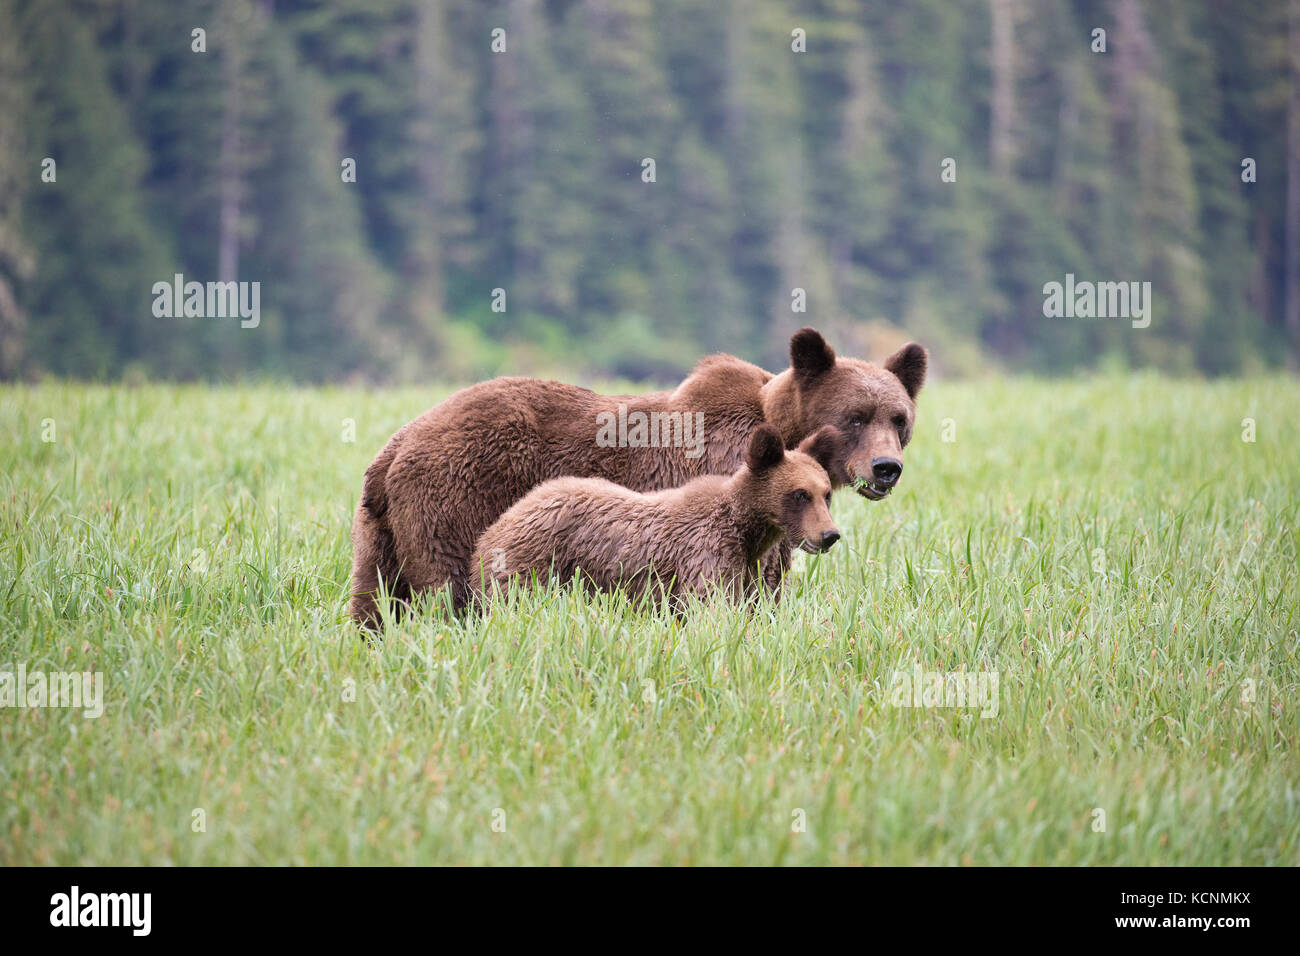 Oso grizzly (Ursus arctos), hembra horriblis y yearling cub comiendo lyngbye lyngbyei la juncia (Carex), khutzeymateen Grizzly Bear sanctuary, British Columbia, Canadá. Foto de stock